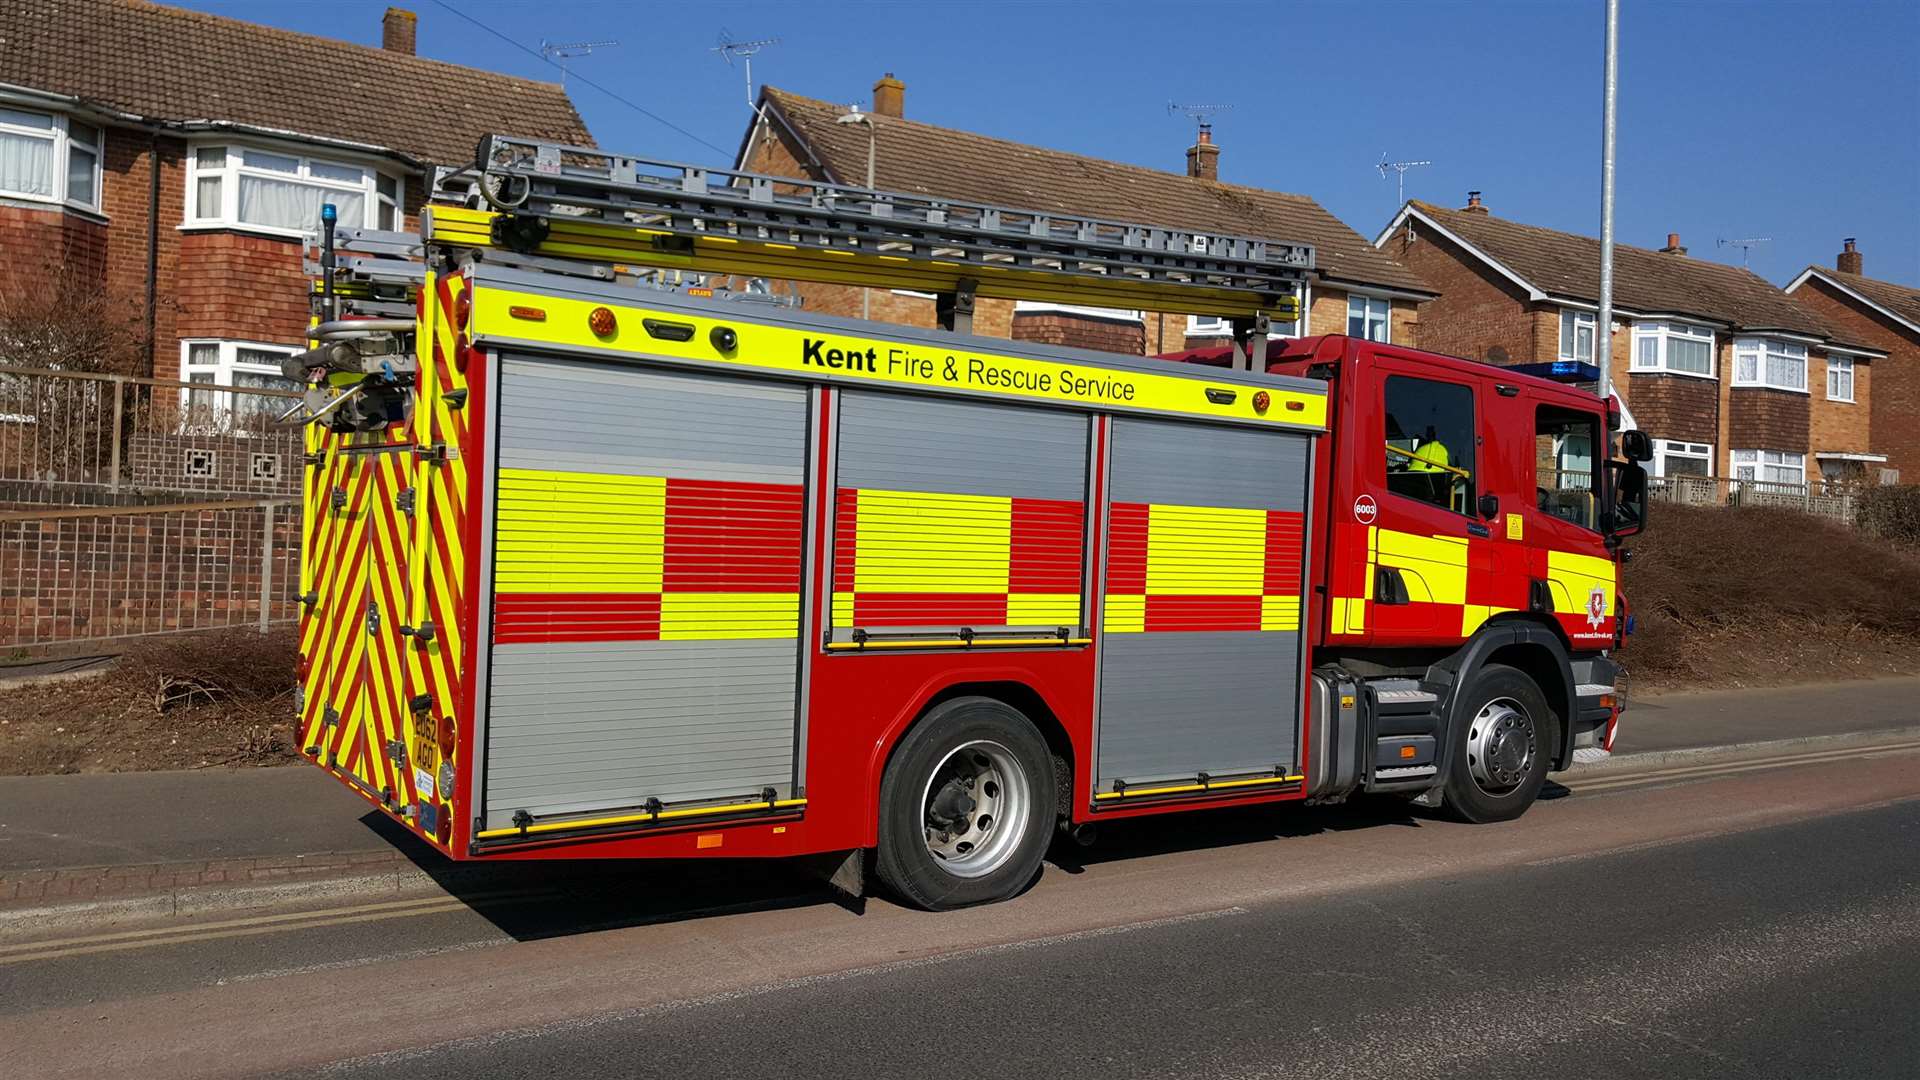 Air Ambulance lands at Ashford Rugby Club